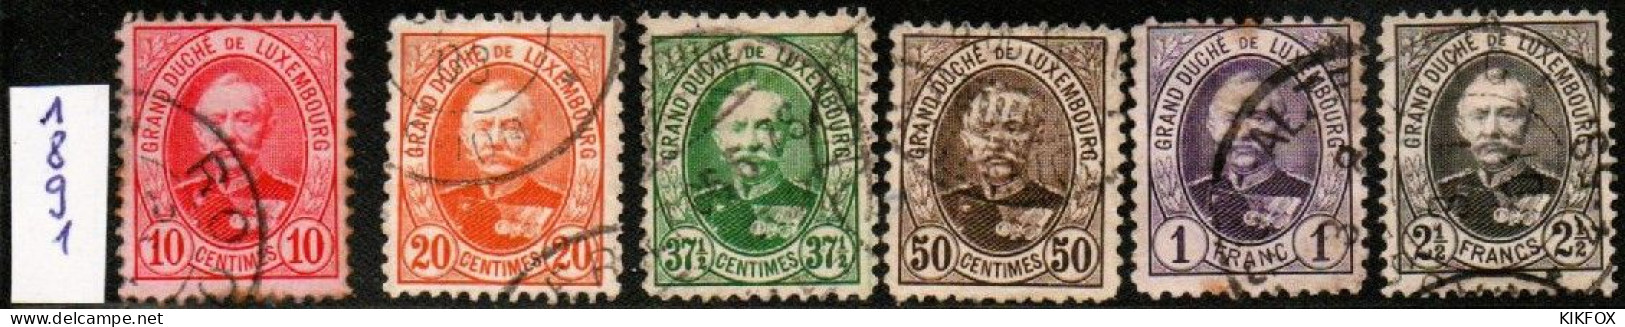 Luxembourg , Luxemburg ,1891, MI 57  59, 62, 63, 64, 65, GROSSHERZOG ADOLF, GESTEMPELT,OBLITERE, - 1895 Adolphe Profil